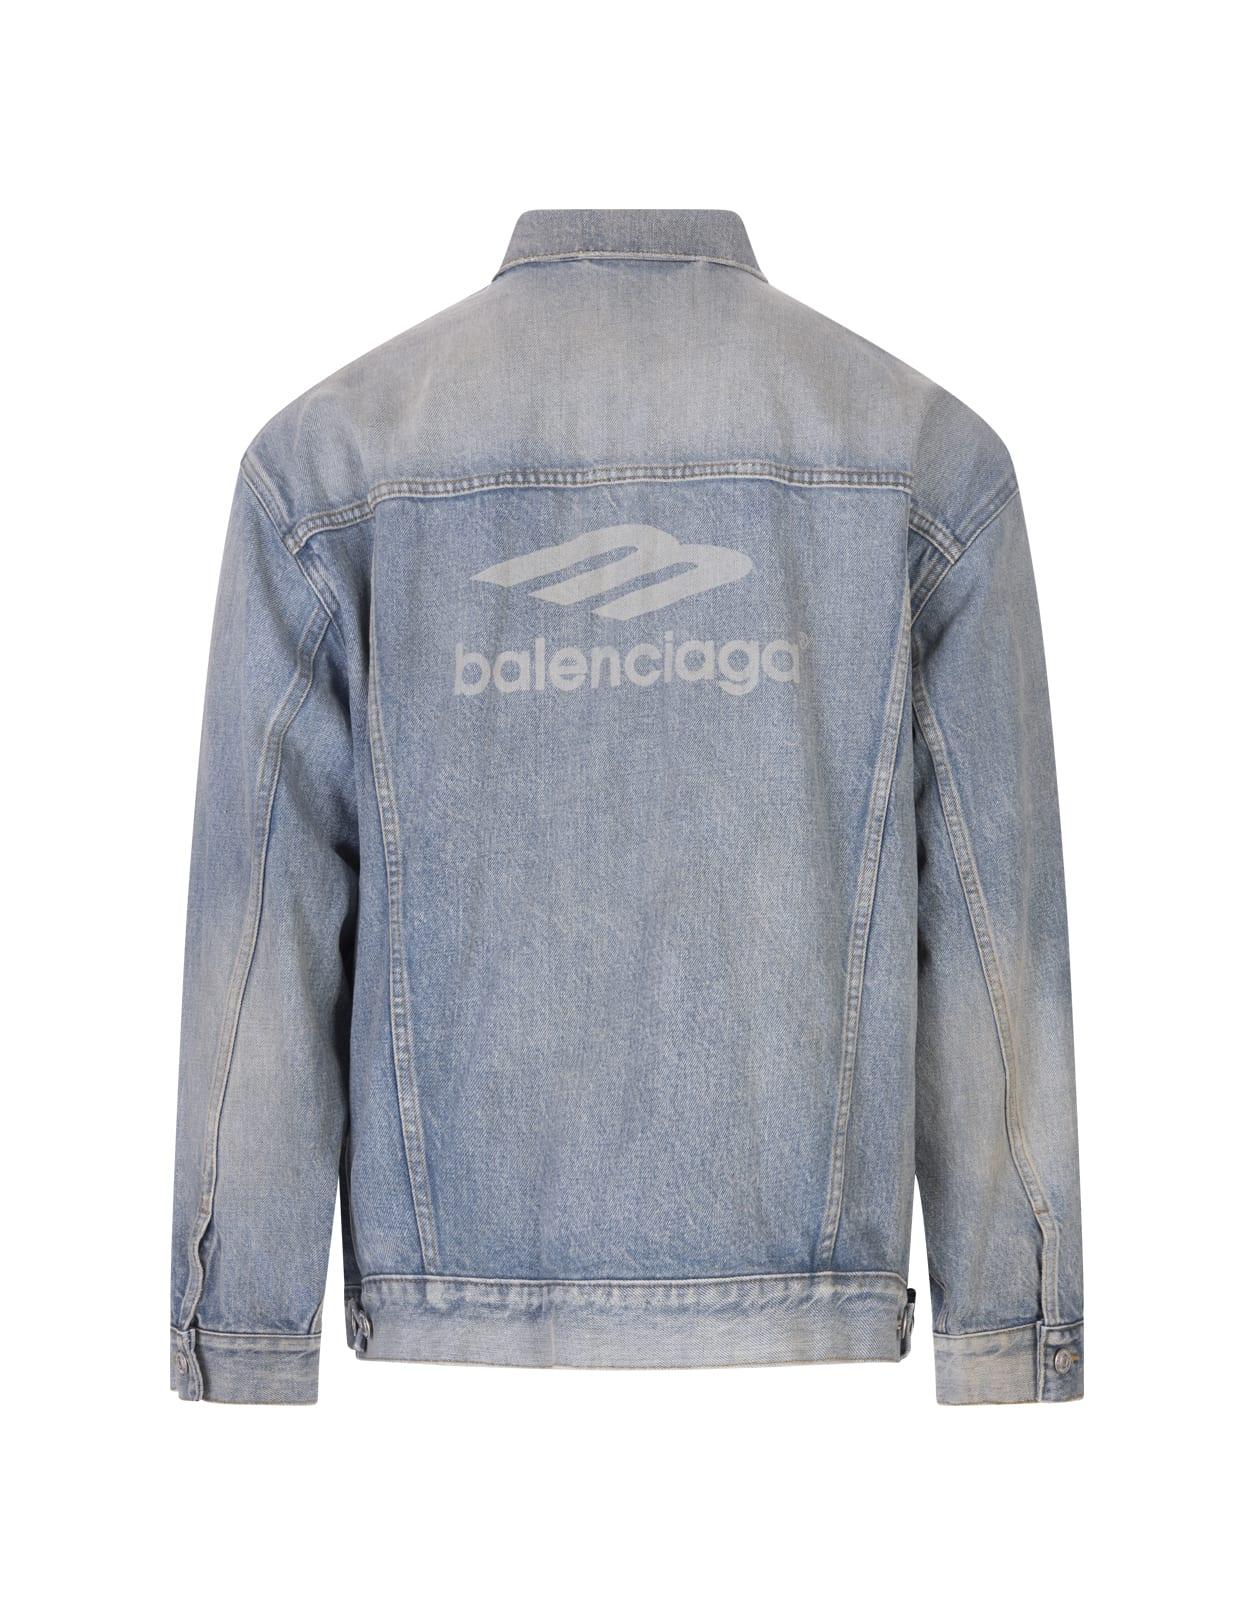 Balenciaga 3b Sports Large Fit Jacket In Light Blue Japanese Denim for Men  | Lyst